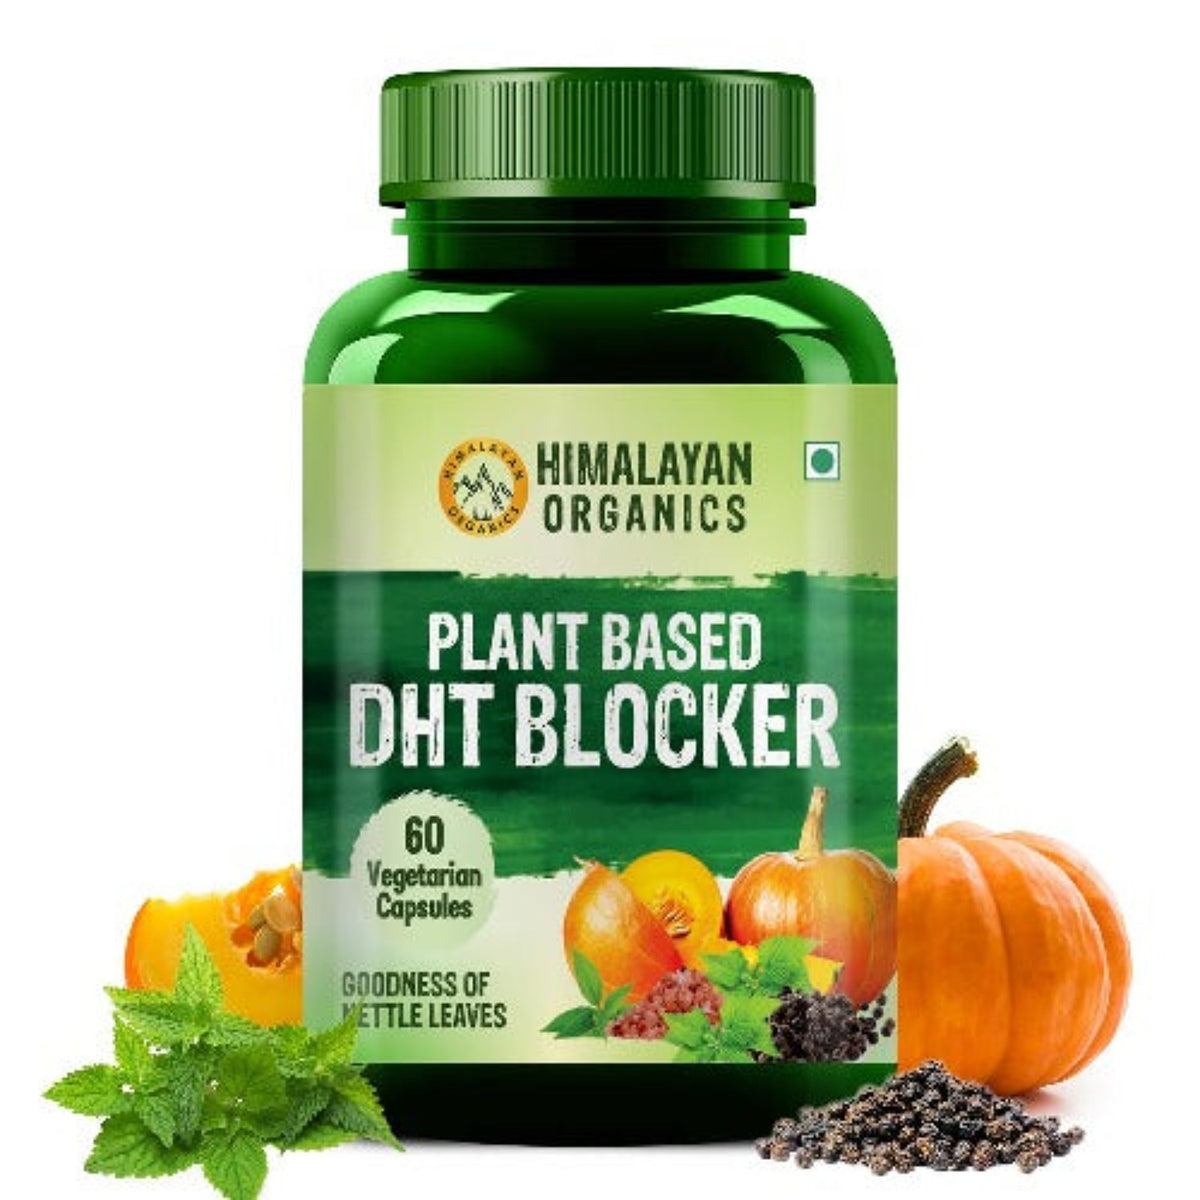 Himalayan Organics Plant Based DHT Blocker Nettle Extract 60 Vegetarian Capsules